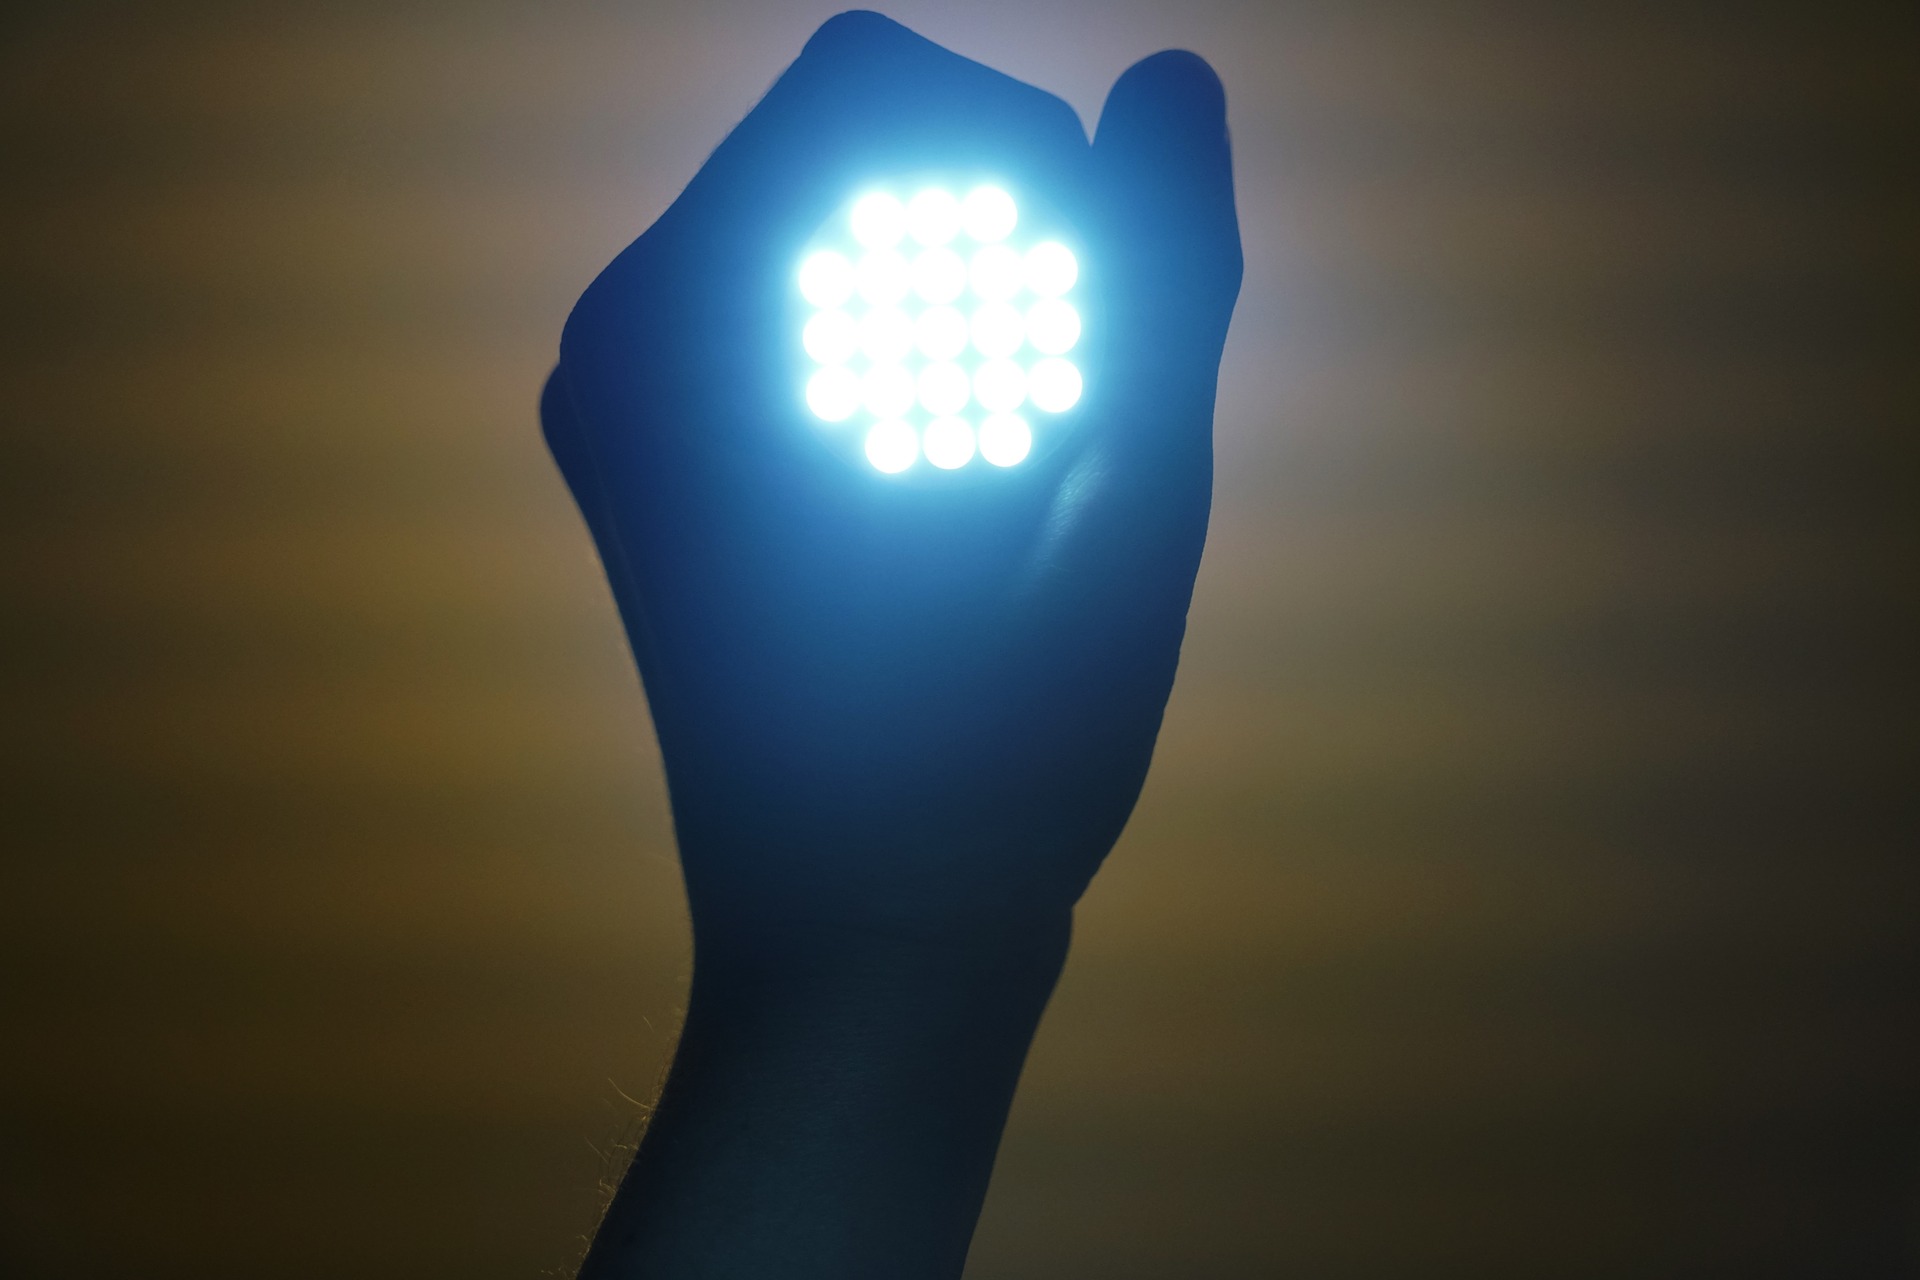 LED Lighting benefits